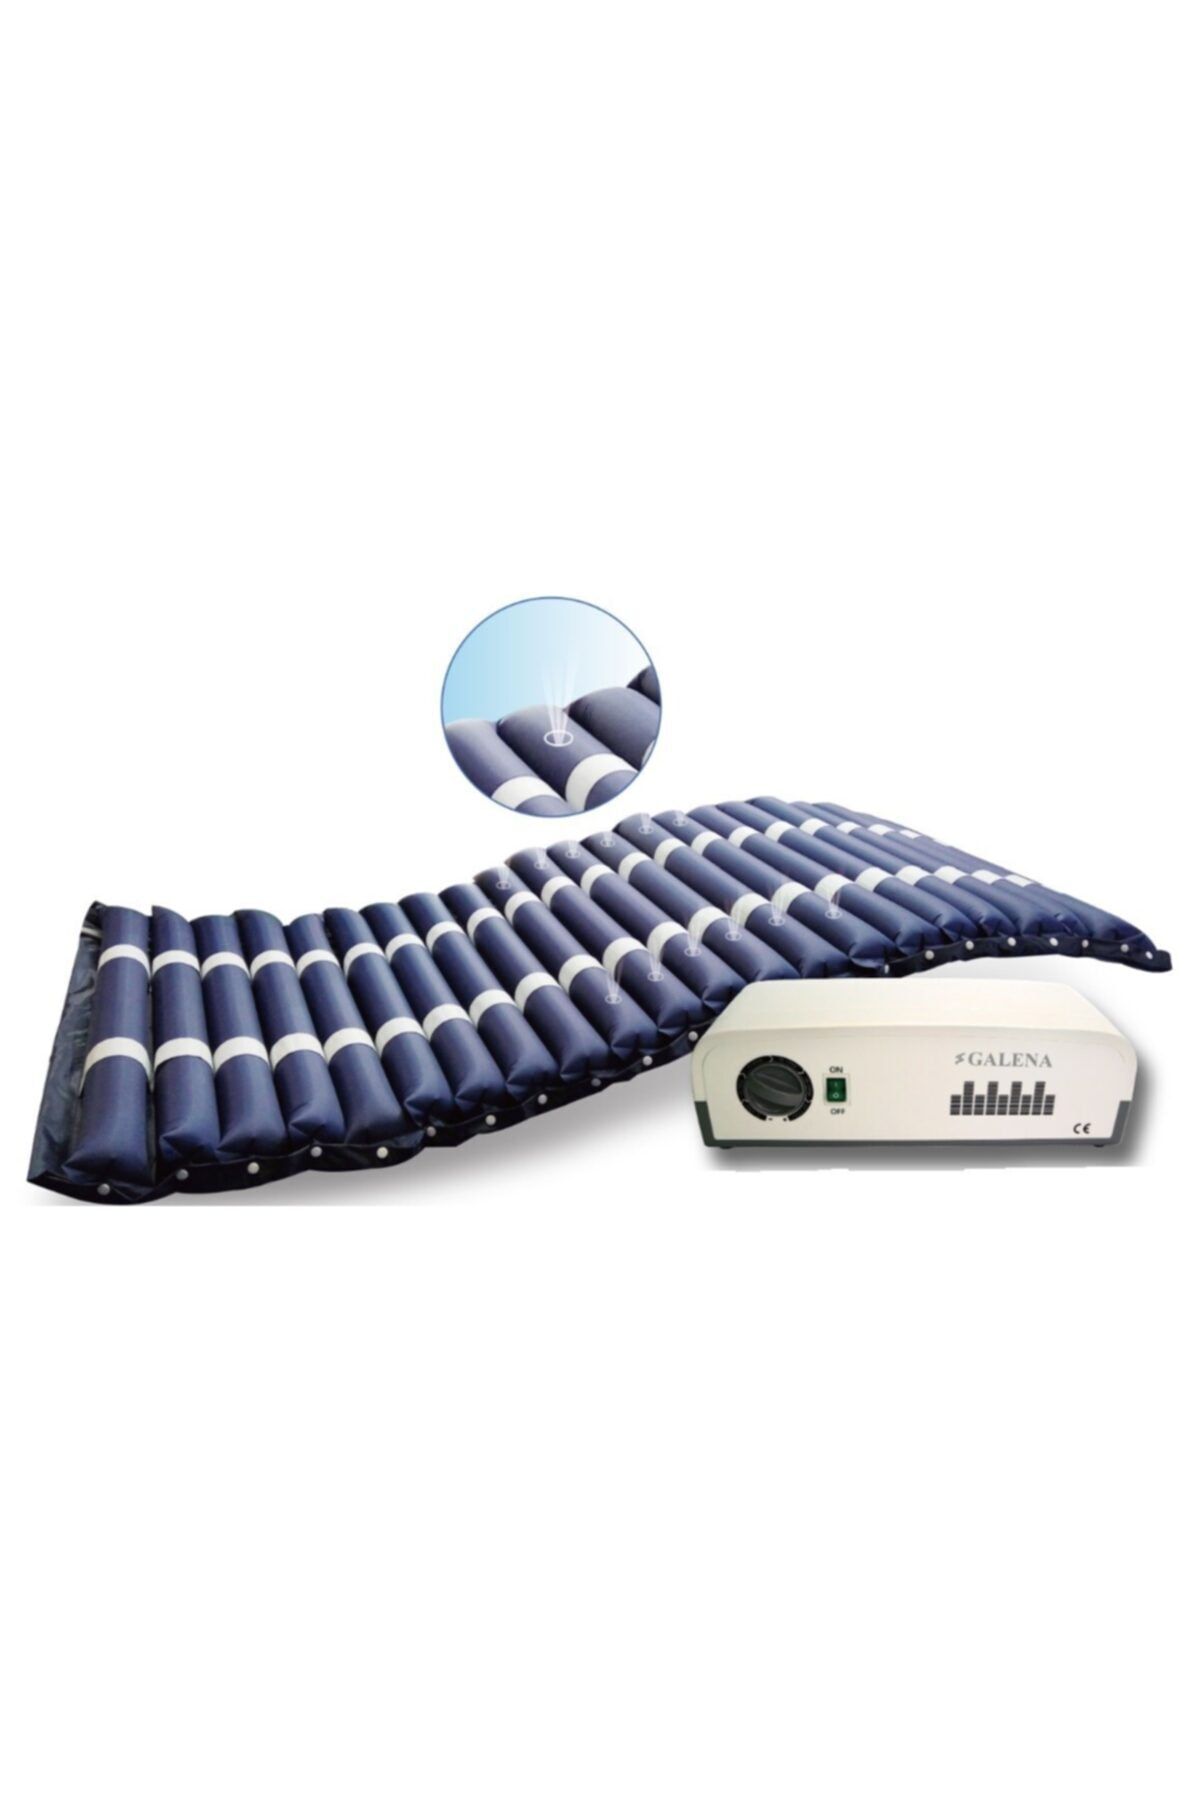 Galena Libra Hasta Yatağı Boru Tipi Havalı Yatak Sistemi Ventilasyonlu